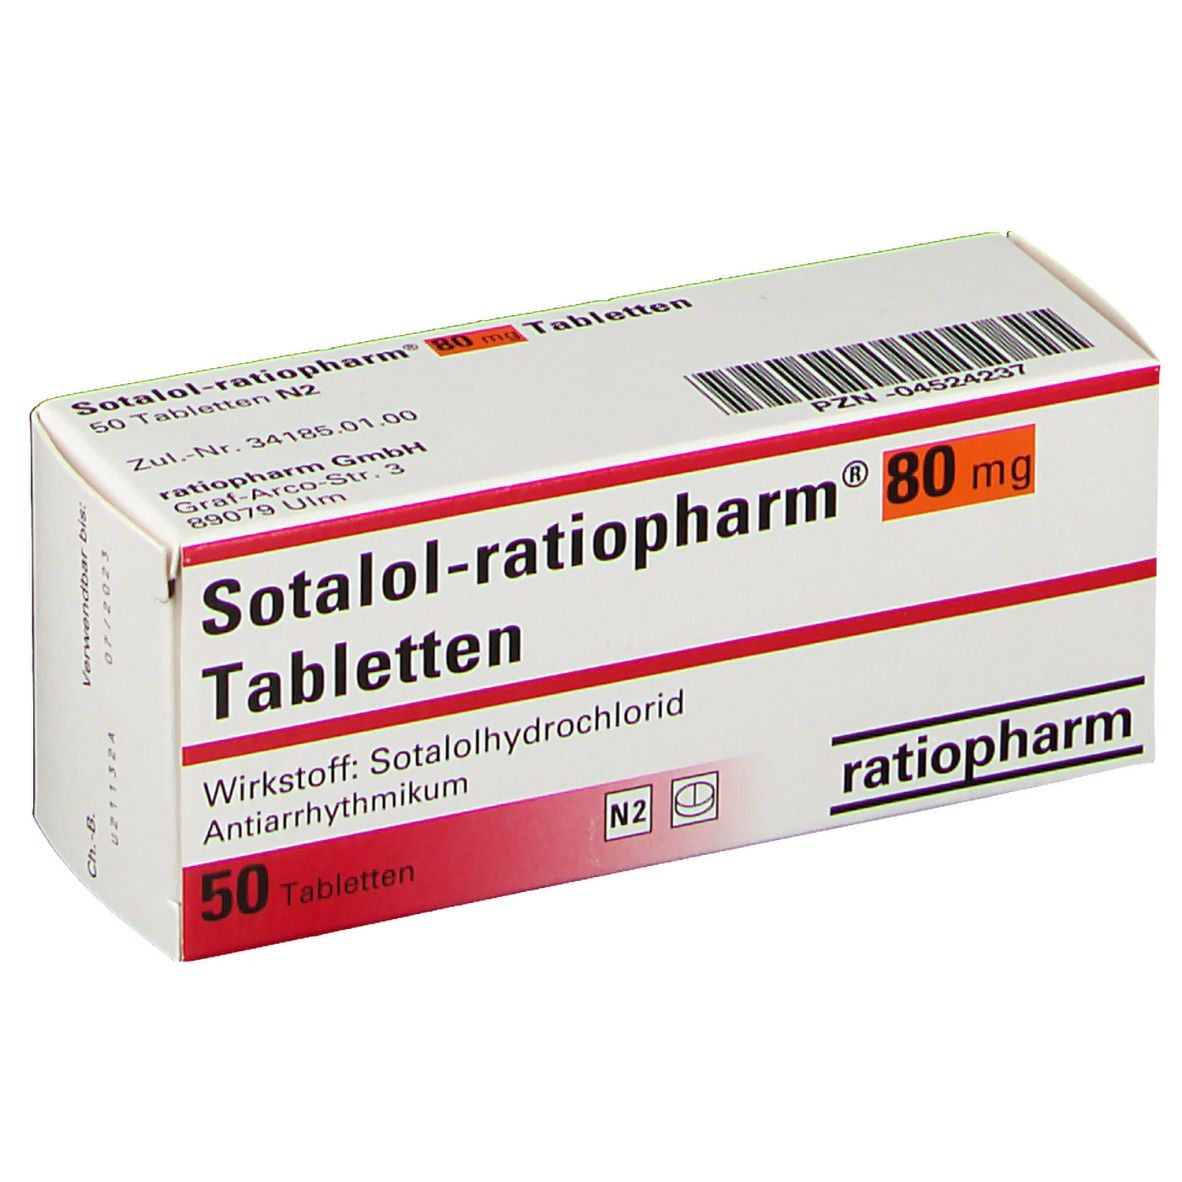 Sotalol-ratiopharm® 80 mg